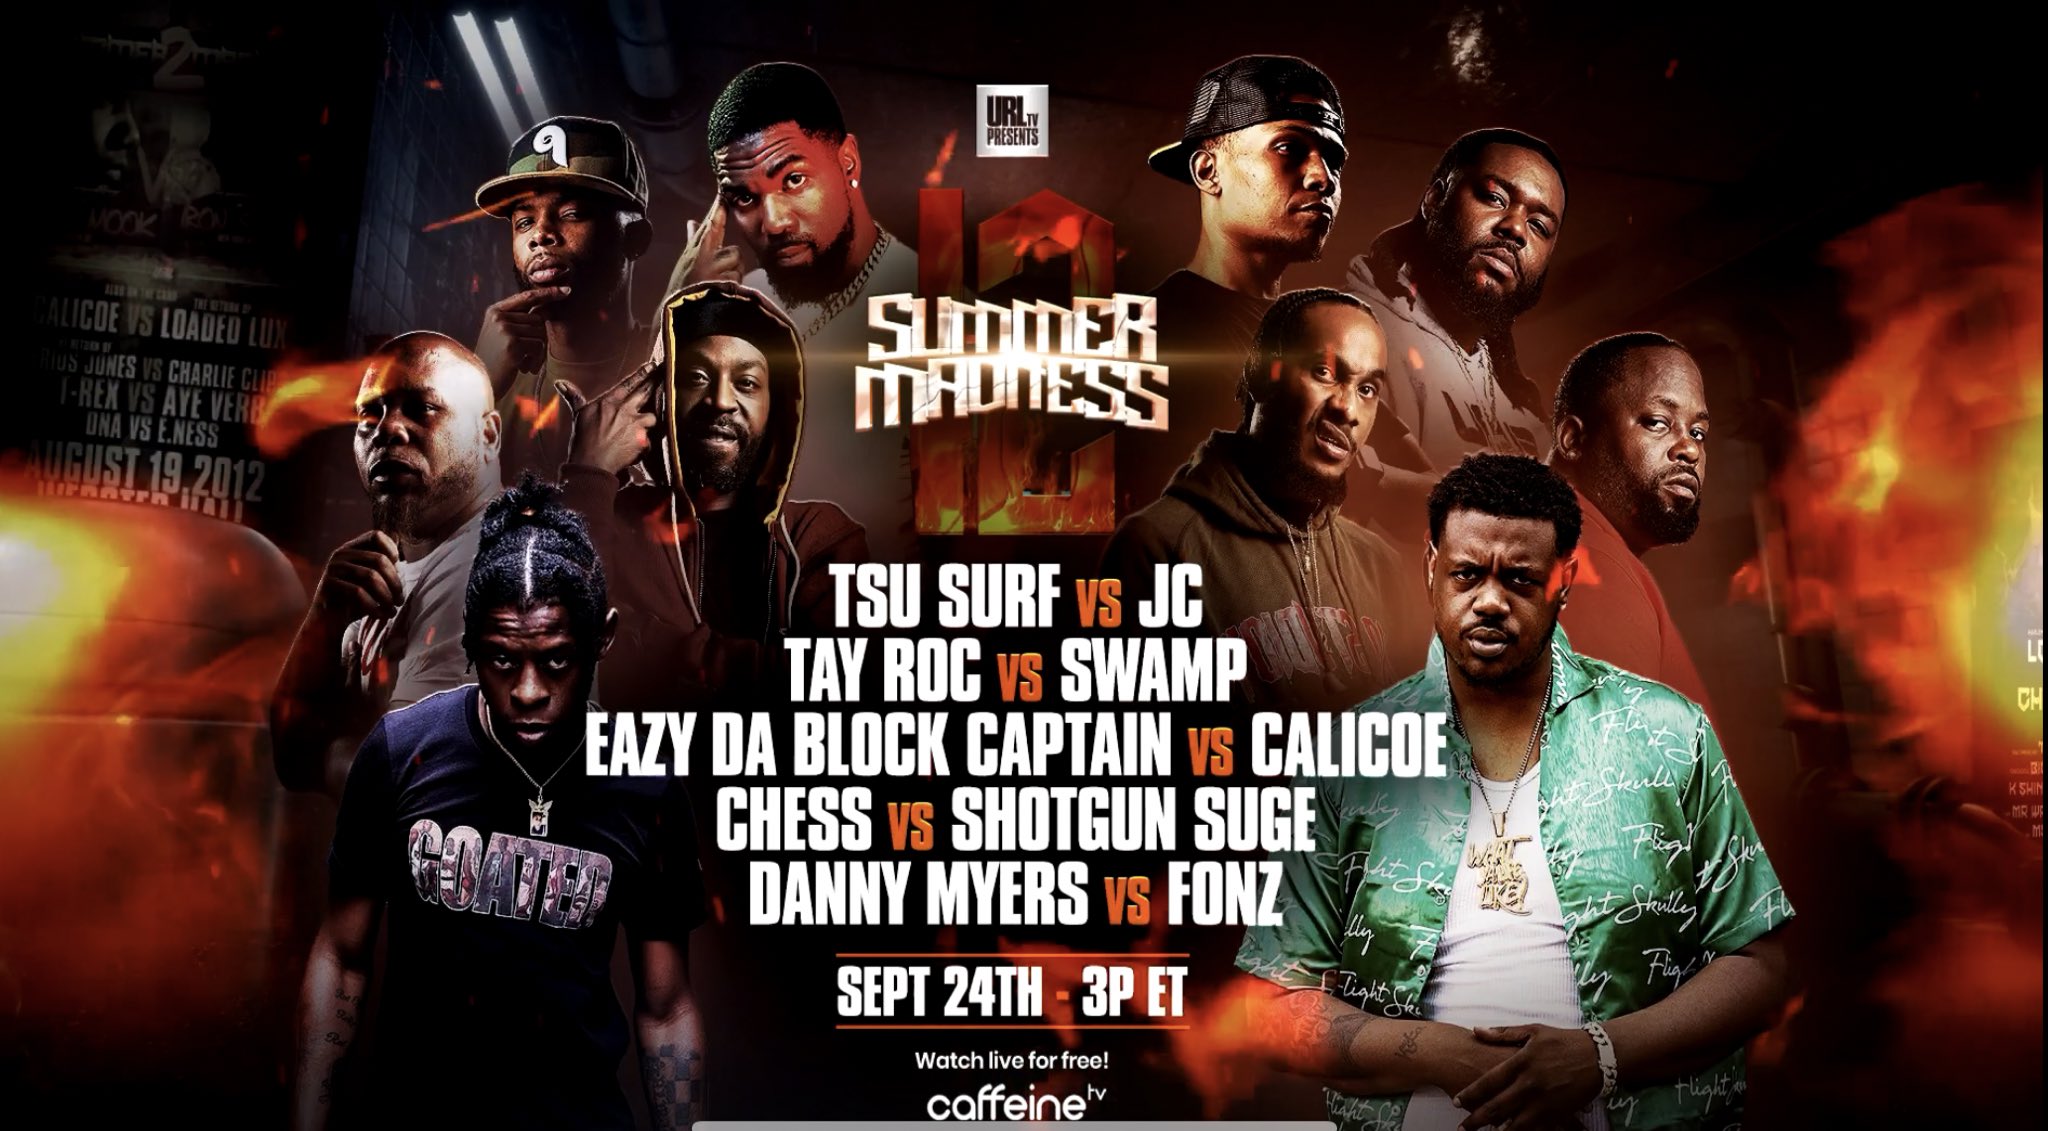 Summer Madness 12 URL Ultimate Rap League Battle Rap Event